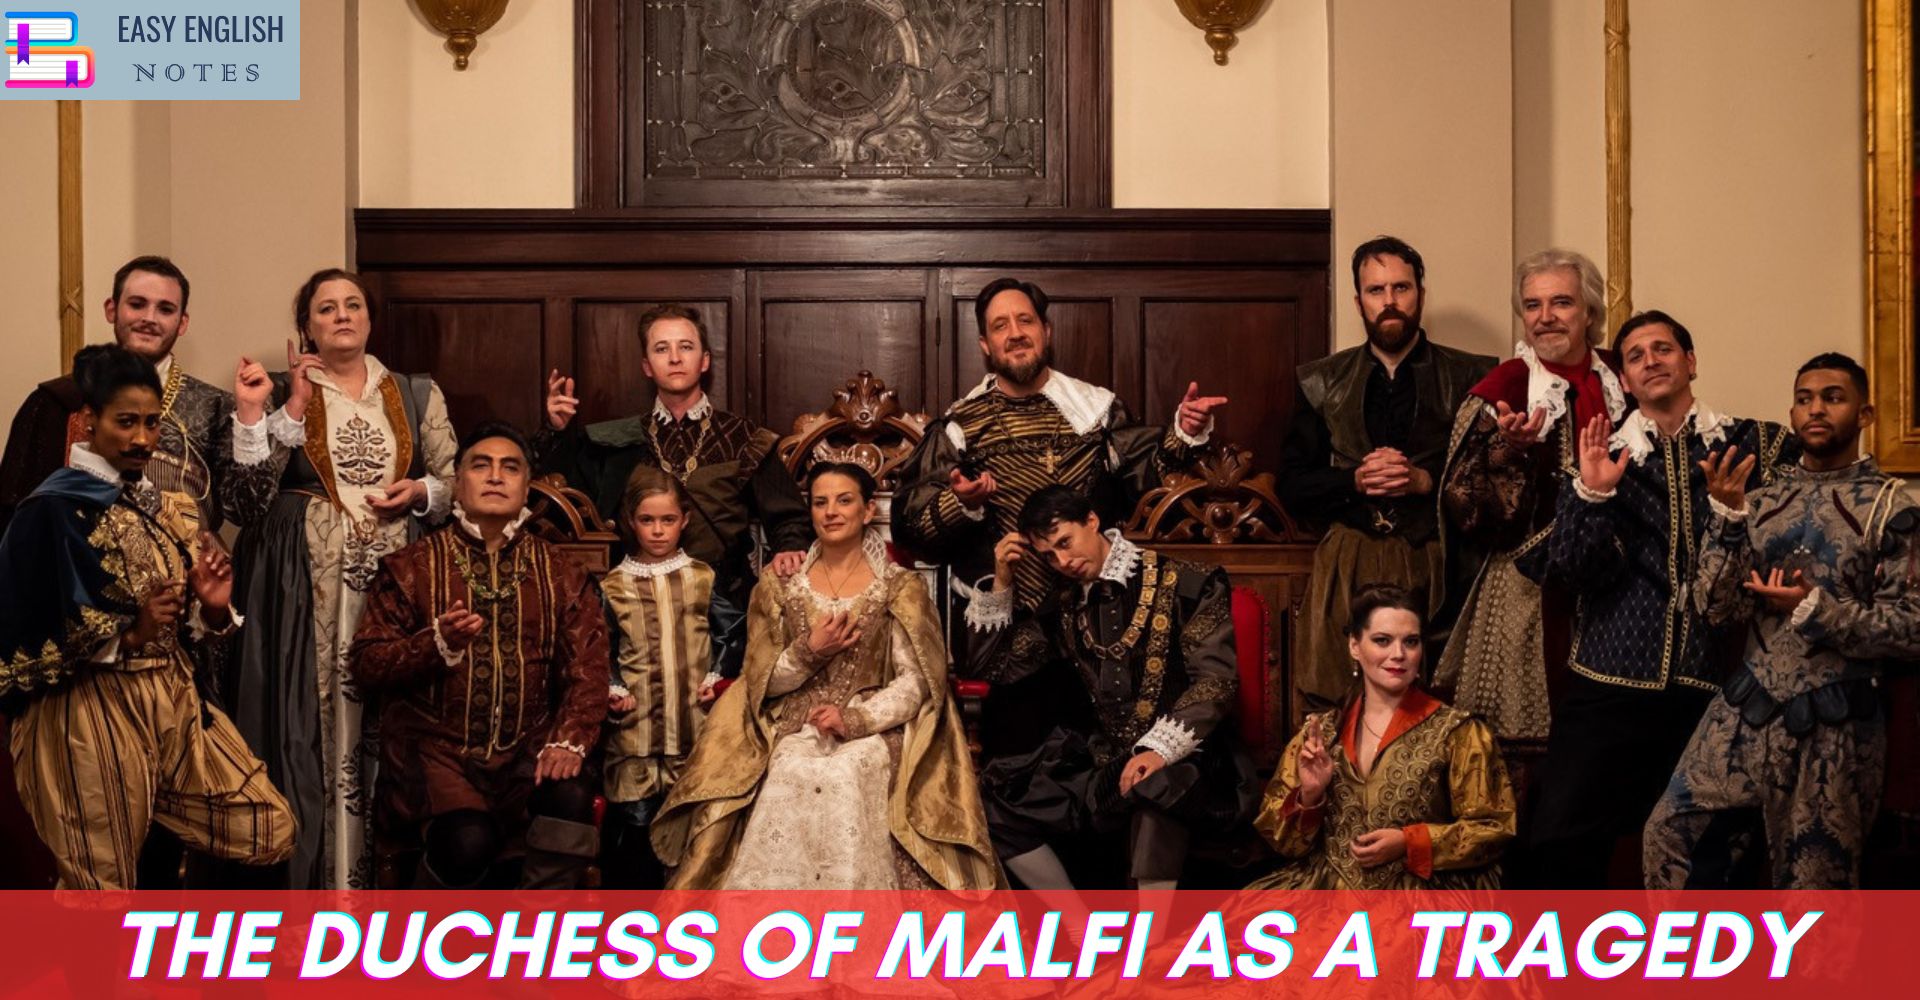 The Duchess of Malfi as a Tragedy